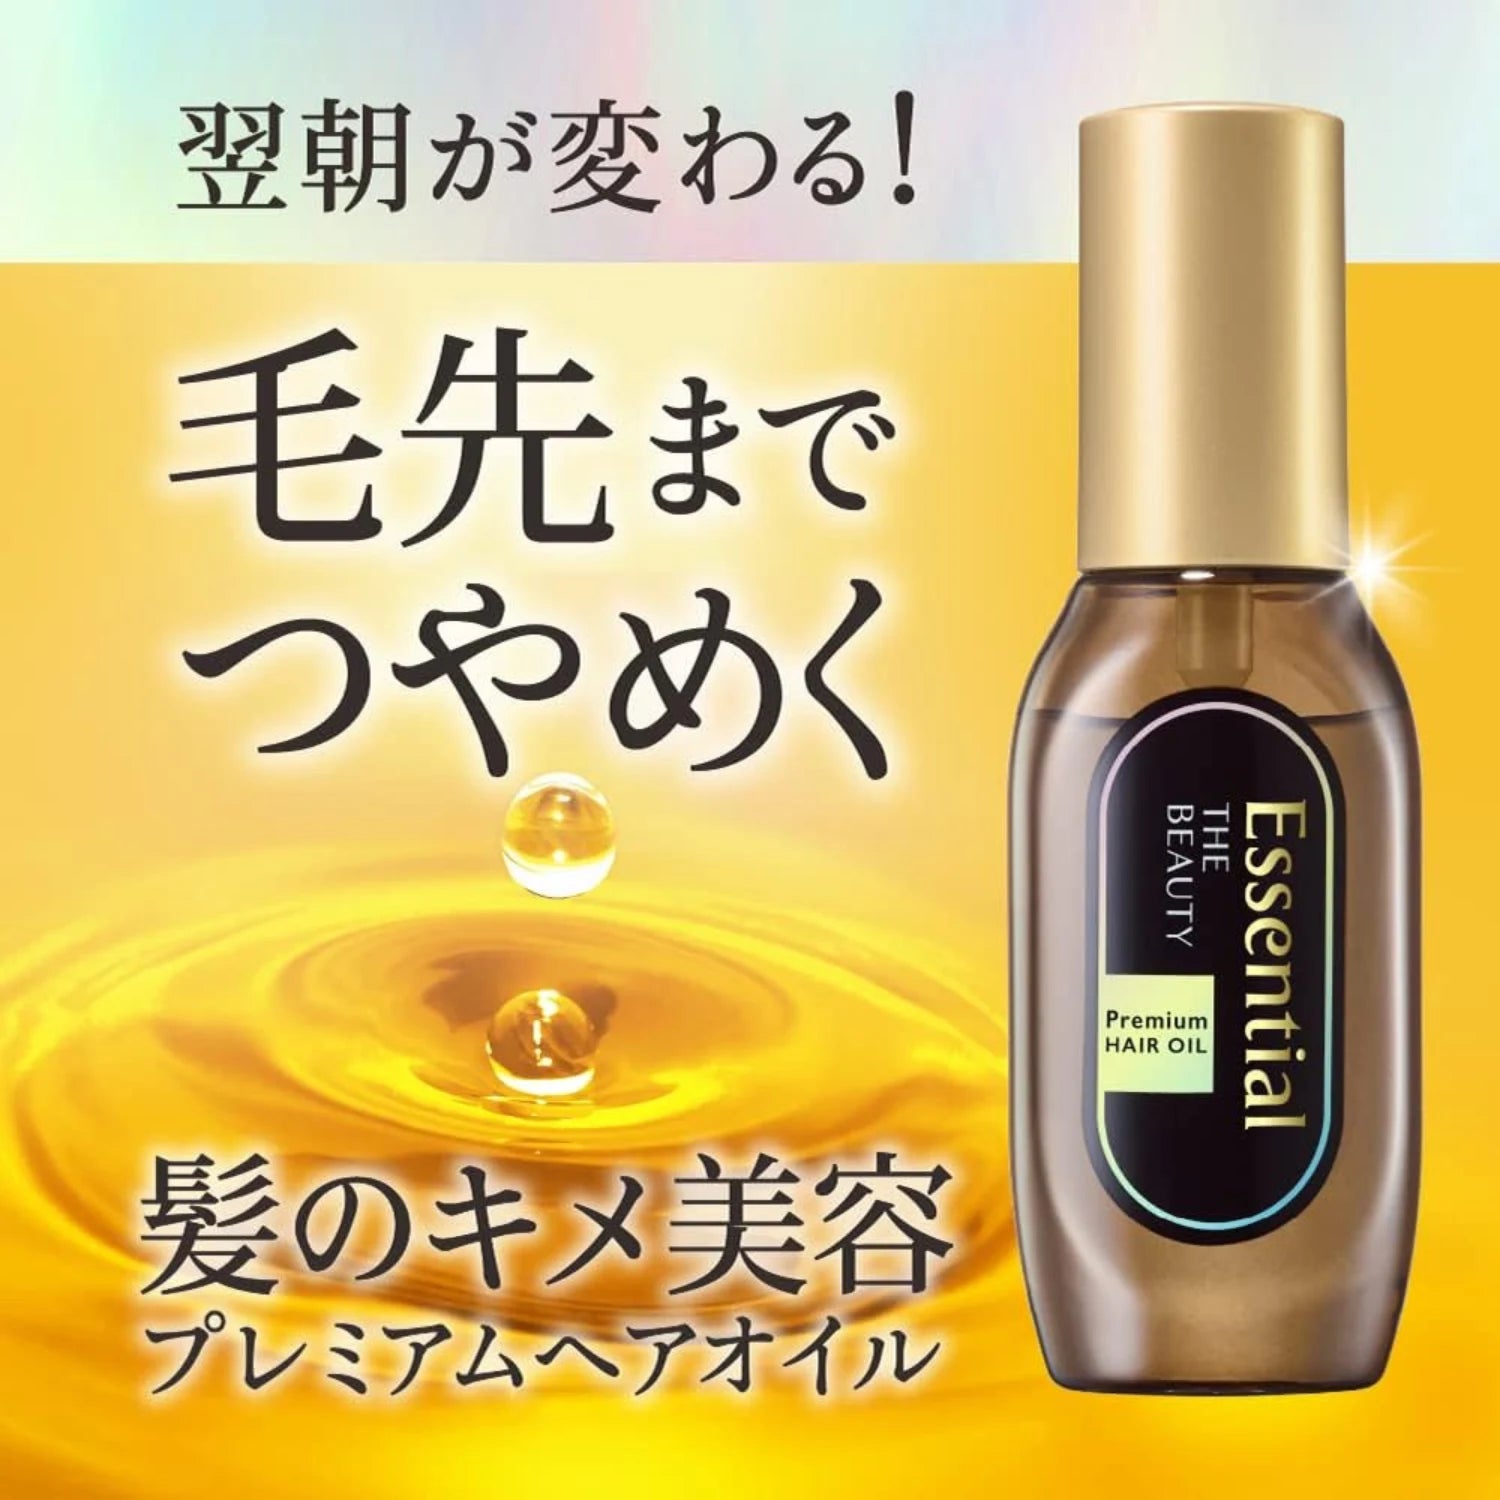 Kao Essential The Beauty Premium Hair Oil 60ml - Buy Me Japan